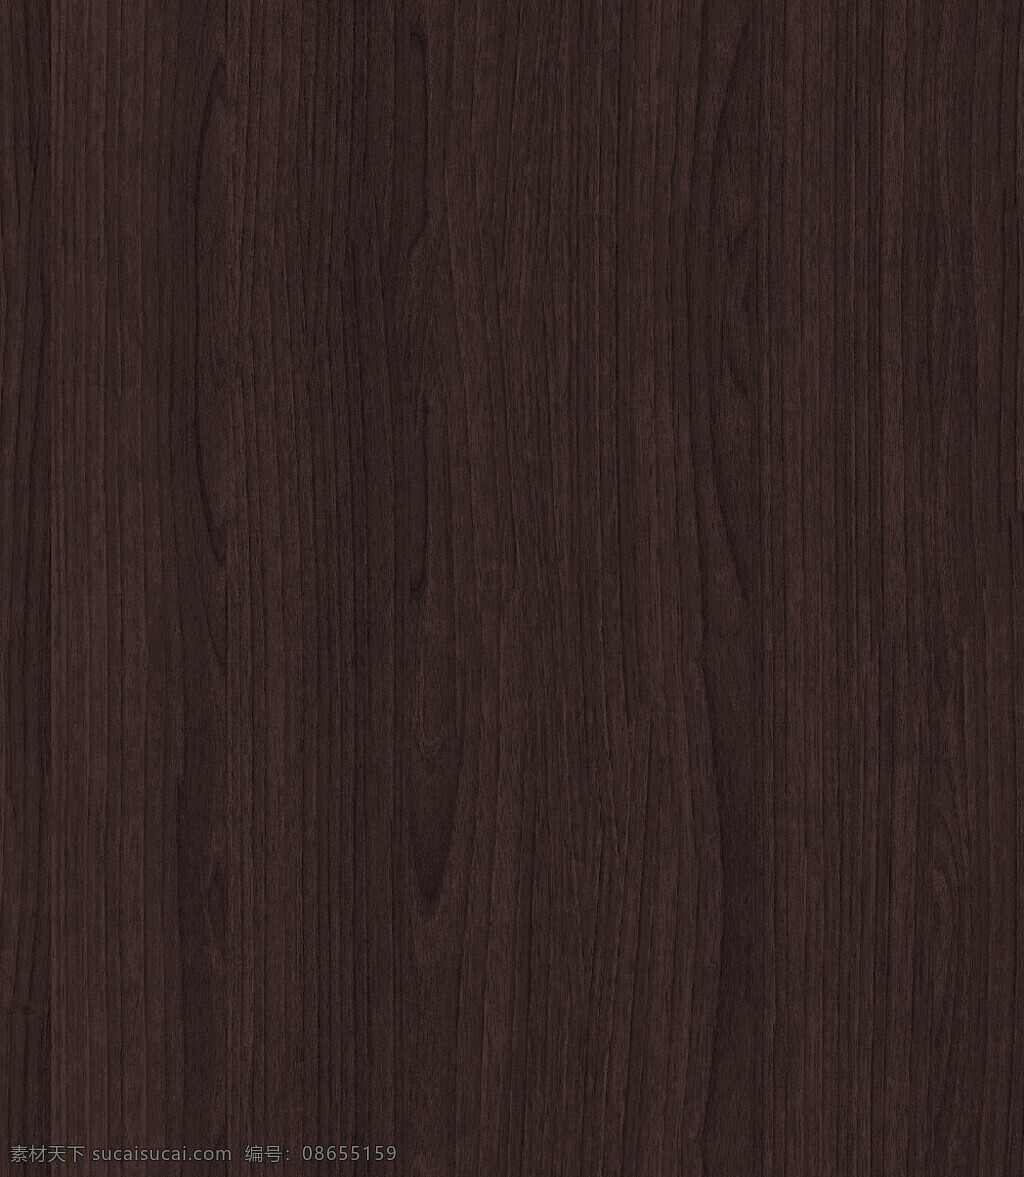 vray 木纹 材质 max9 木材 有贴图 浅褐色 亚光 3d模型素材 材质贴图